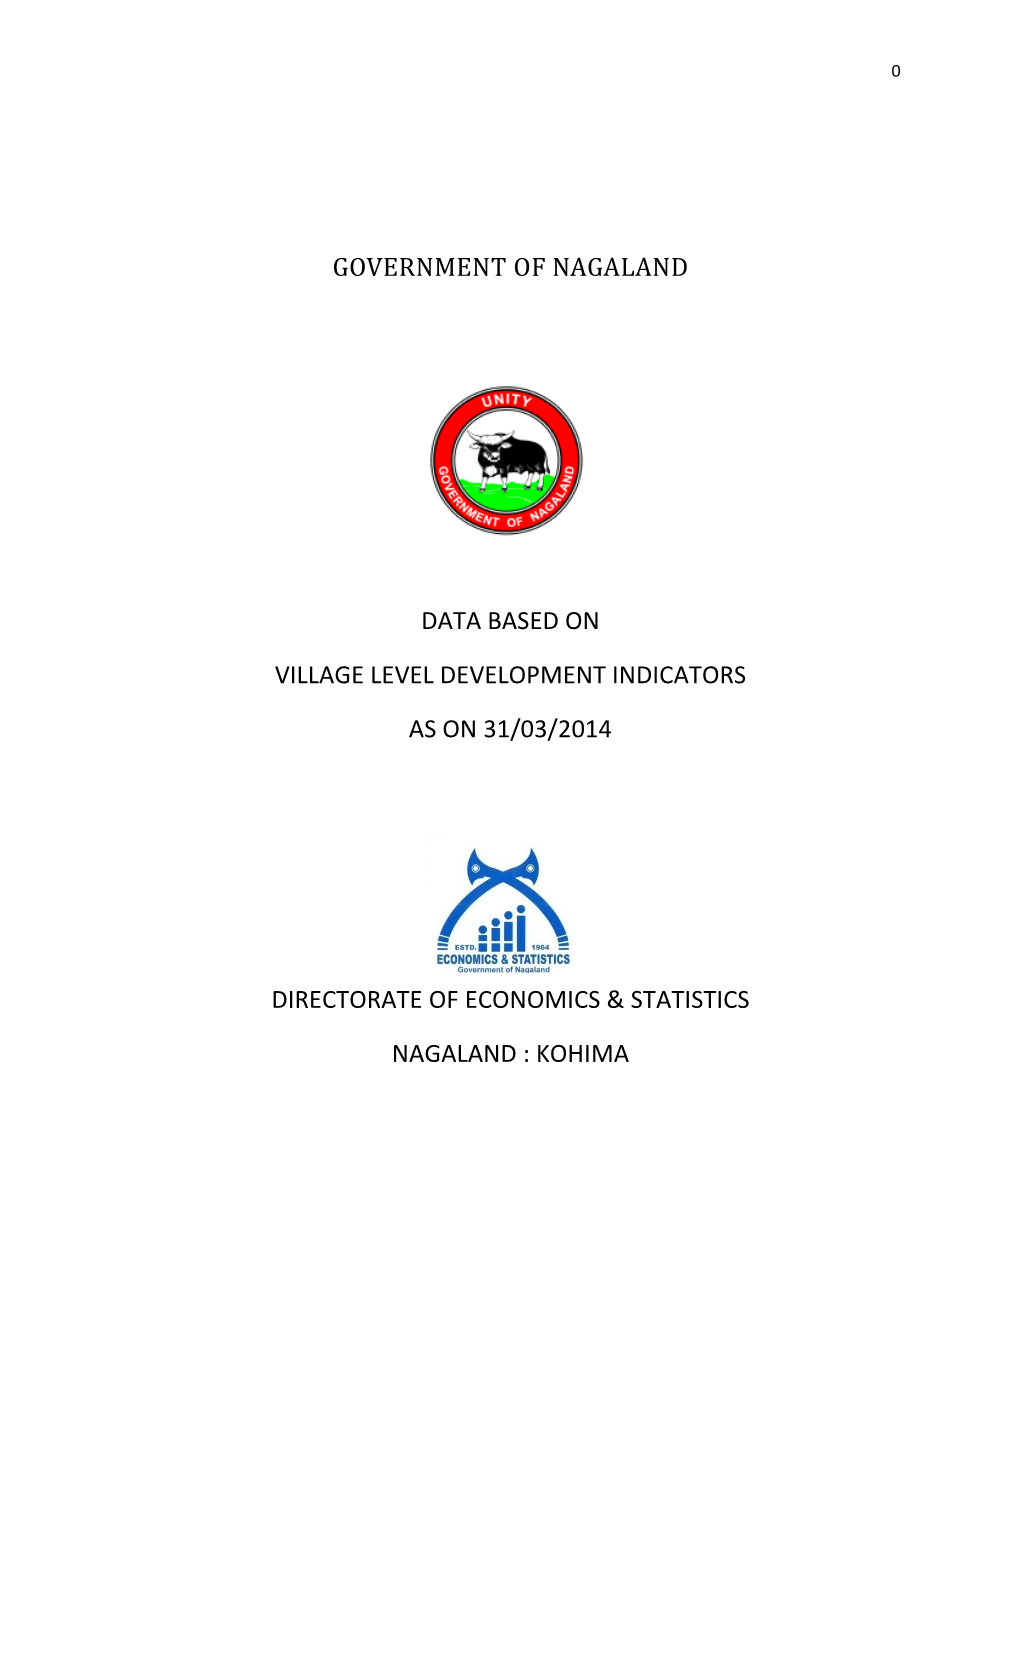 Government of Nagaland Data Based on Village Level Development Indicators As on 31/03/2014 Directorate of Economics & Statis